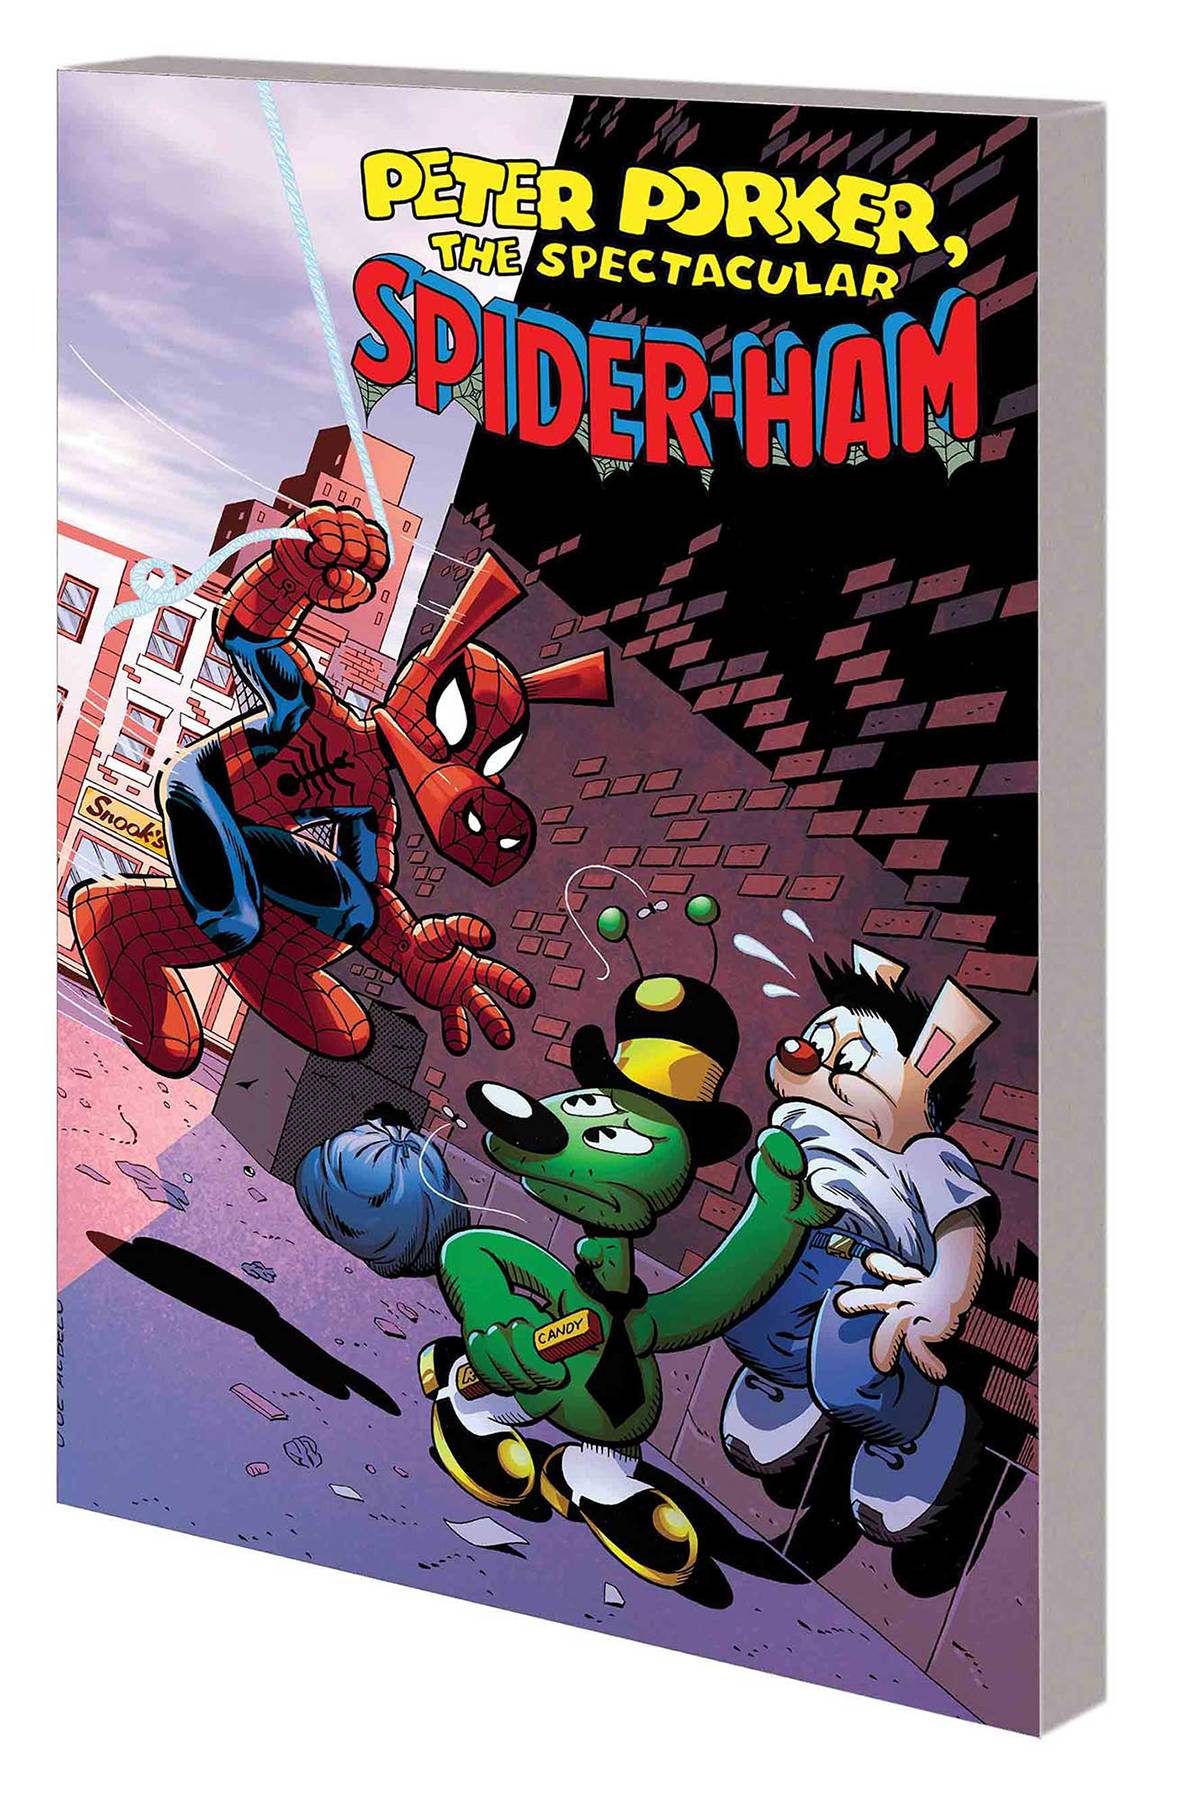 Peter Porker Spectacular Spider-Ham Complete Collection Graphic Novel Volume 1